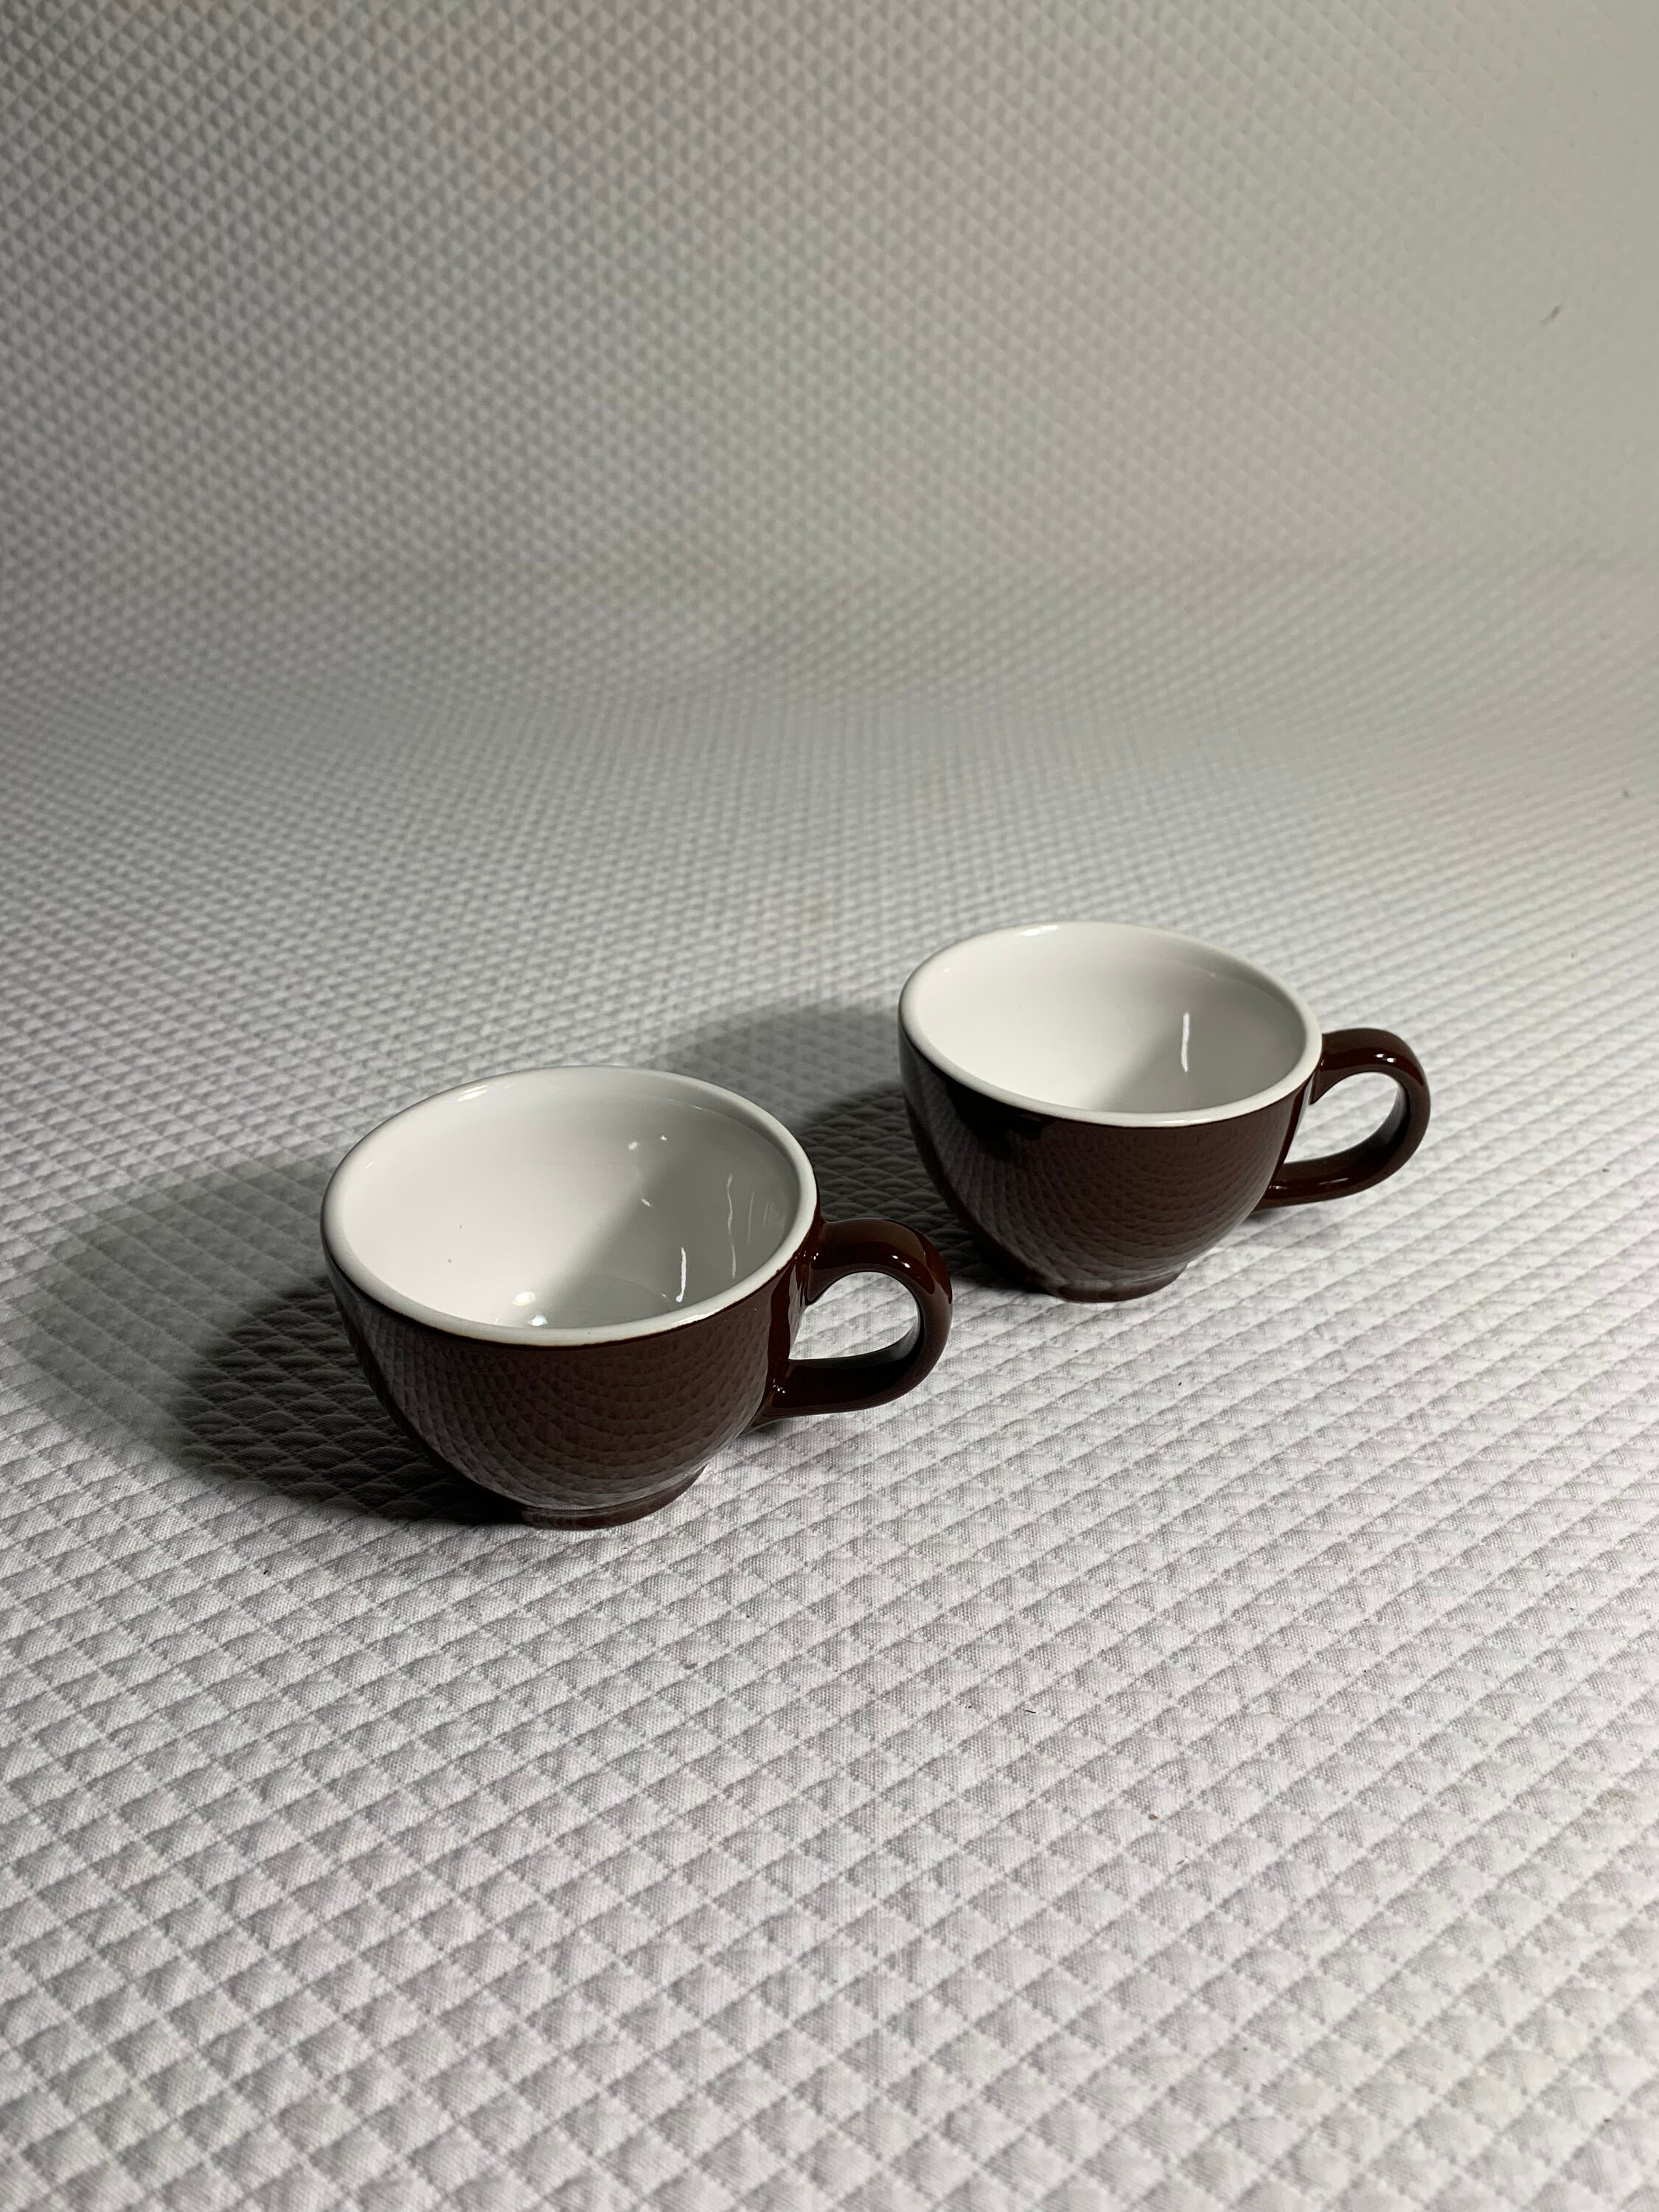 DanceeMangoos Ceramic Kiln-Change Espresso Cups Small Espresso Coffee Cup  Spirits Cups Tasting Cups Ceramic Mate Cup (2 x 3.52 Oz, Red)